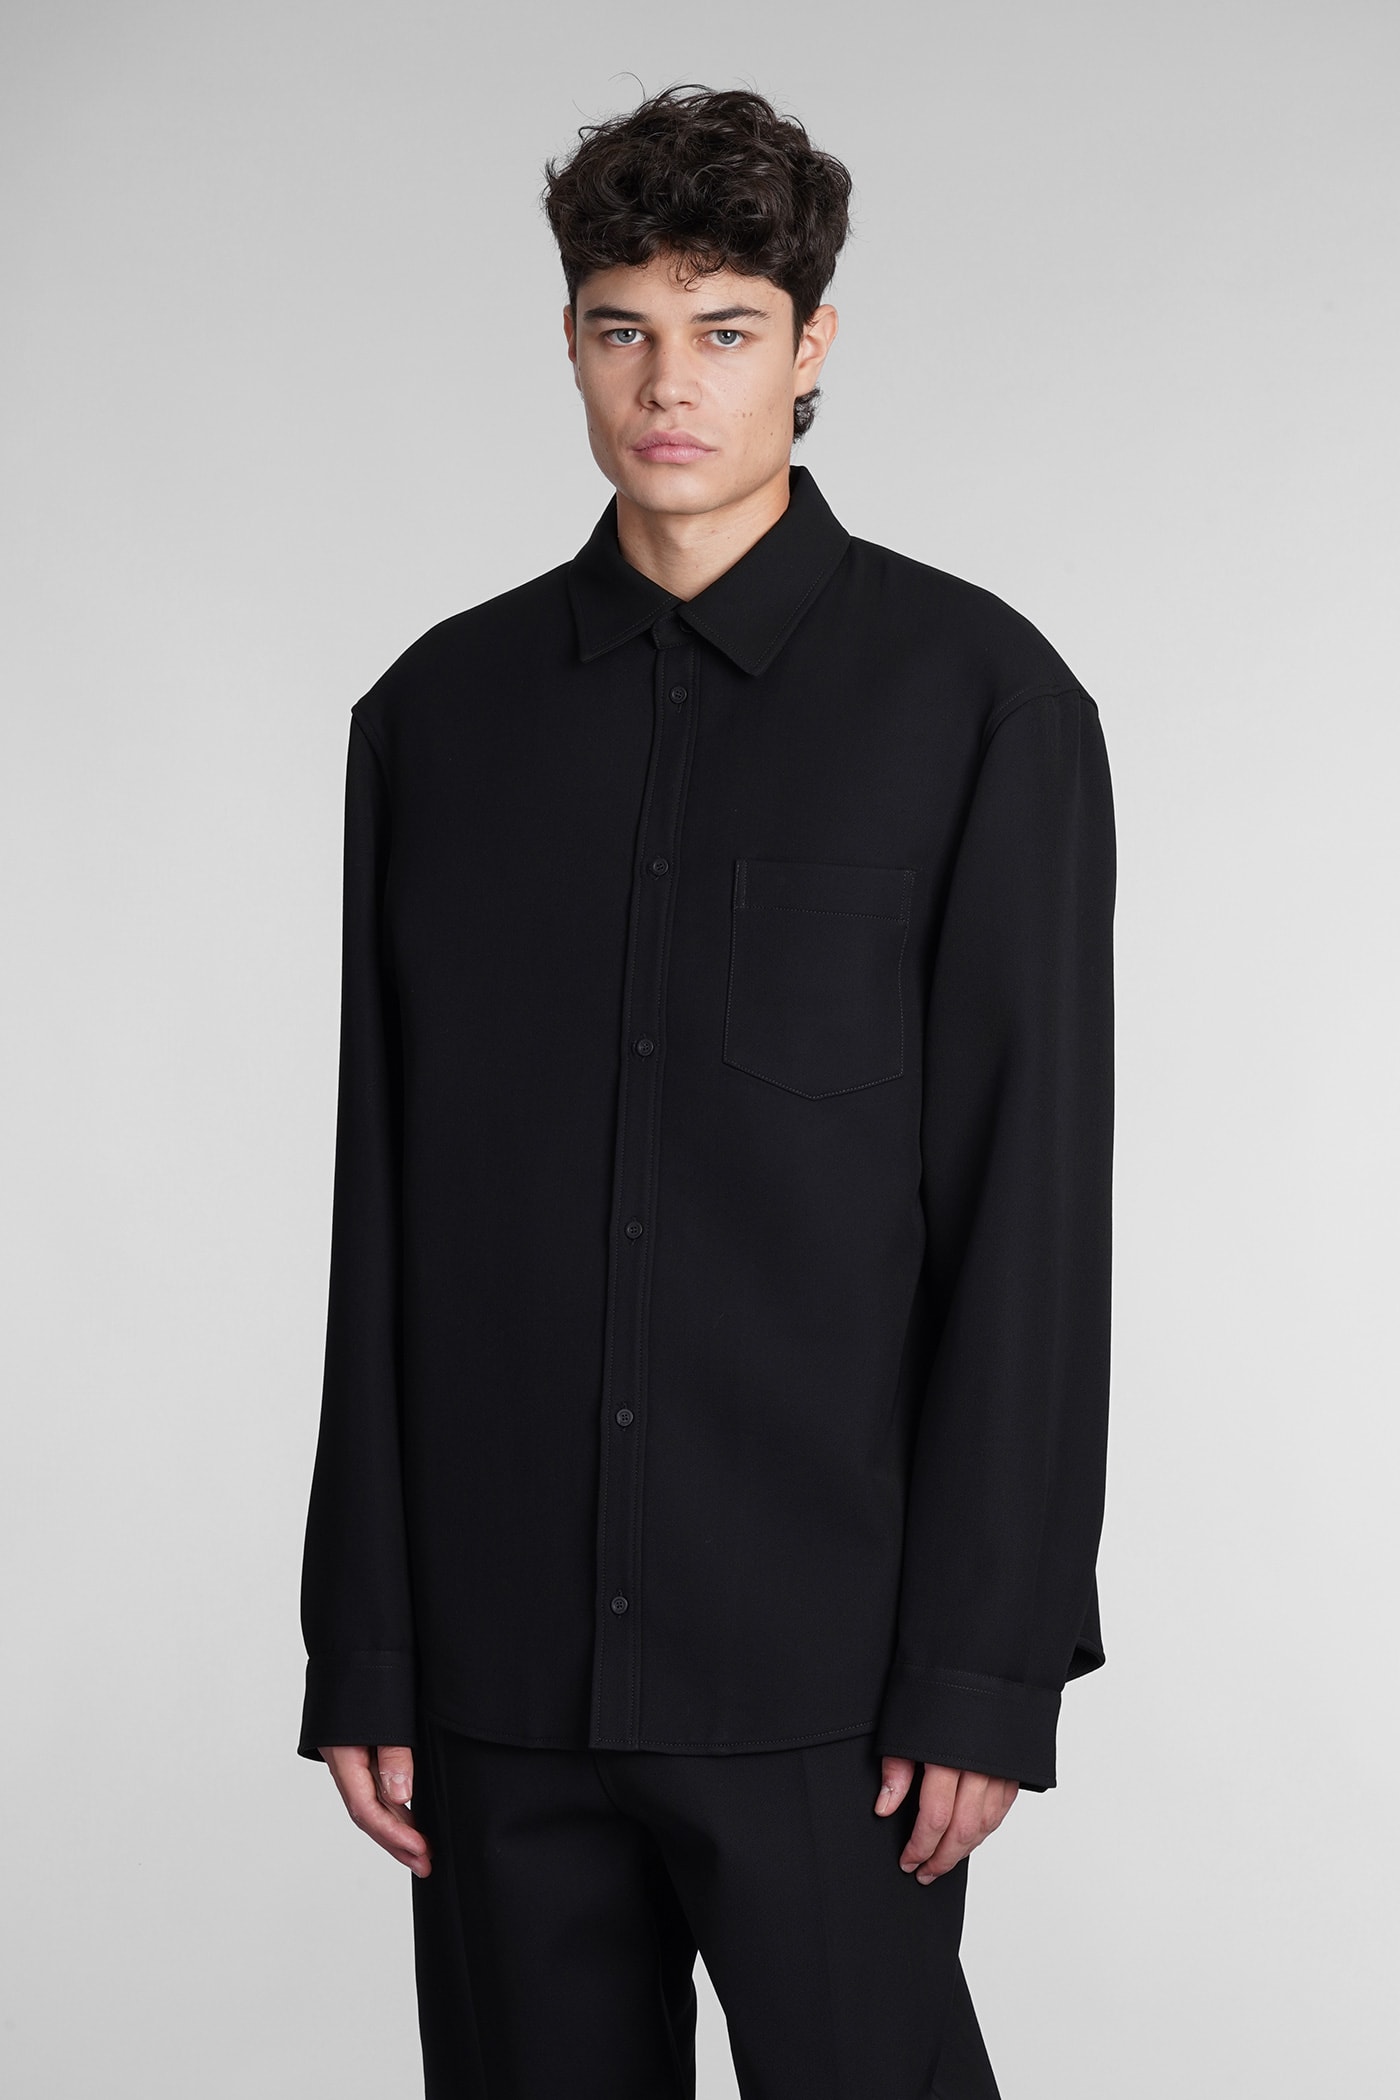 Balenciaga Shirt In Black Wool